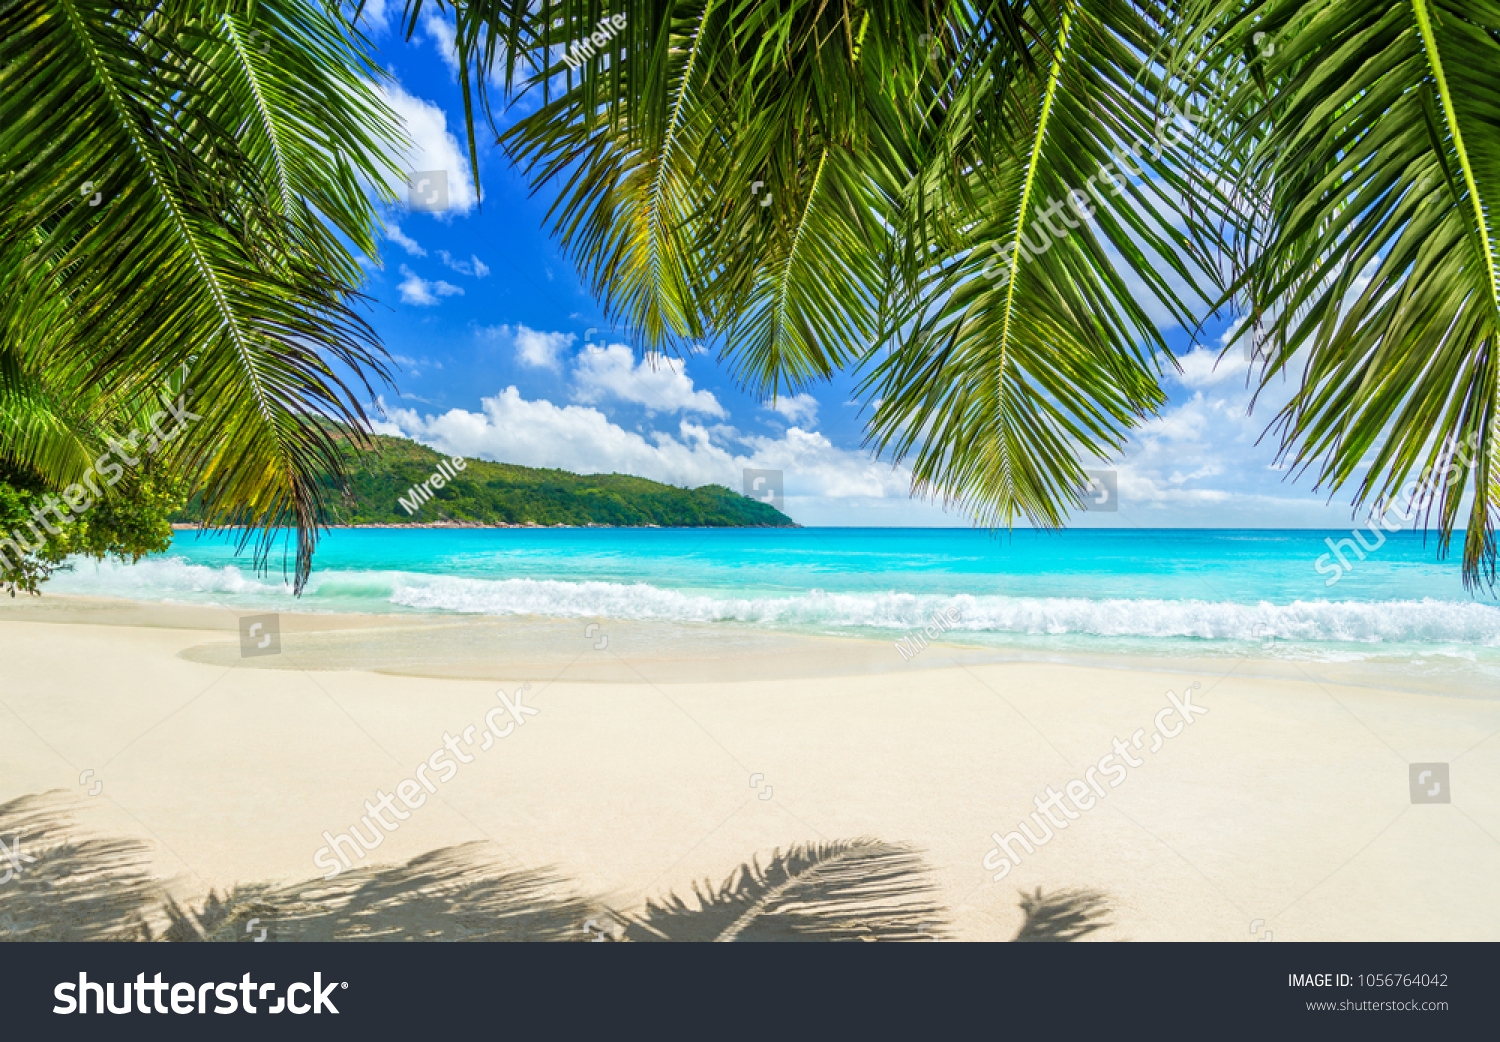 Seychelles Tropical Beach Anse Lazio Praslin Nature Stock Image 1056764042,10 Most Beautiful Beaches In The World